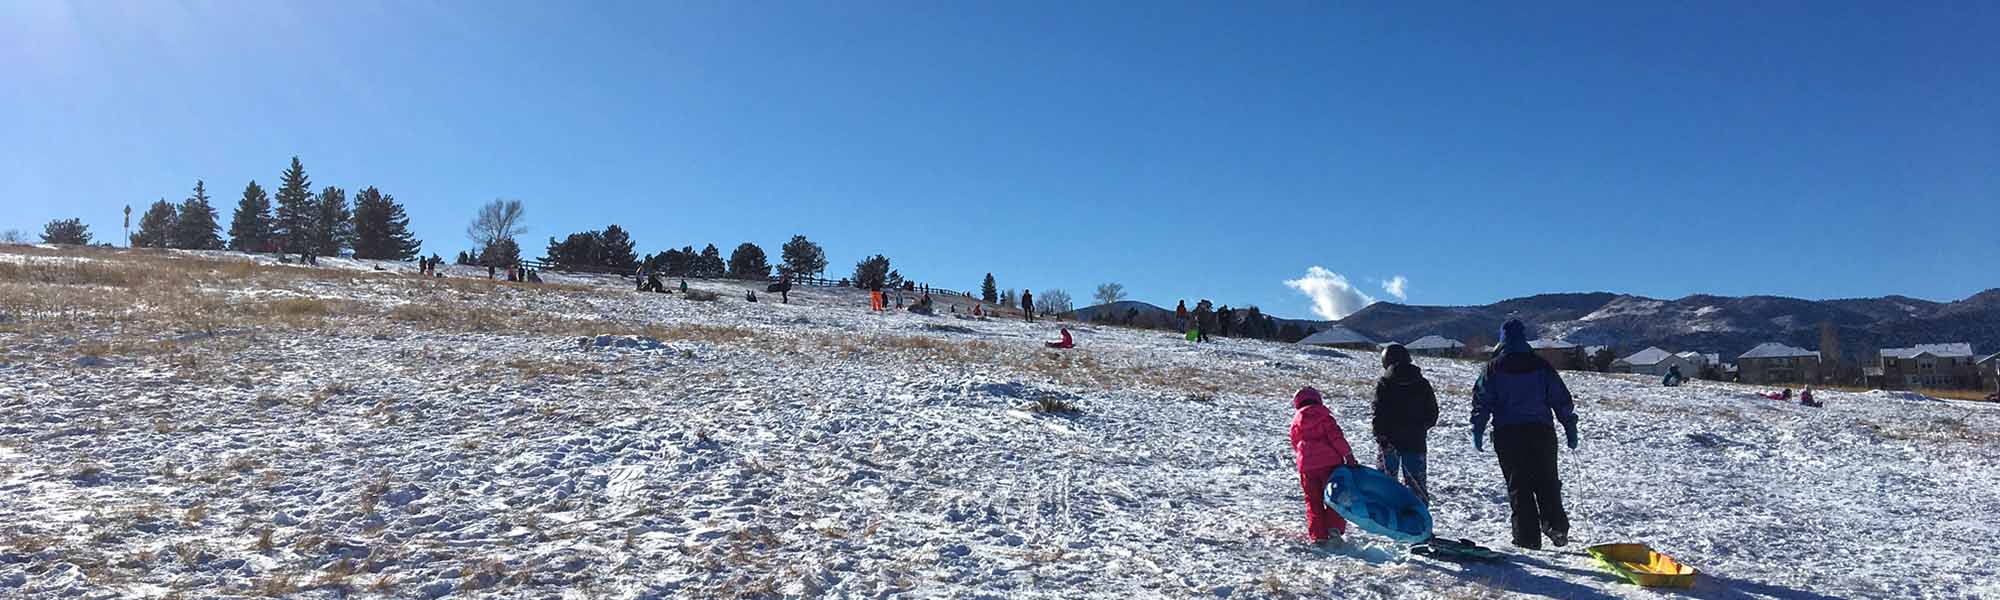 Families sledding down a snowy hill.